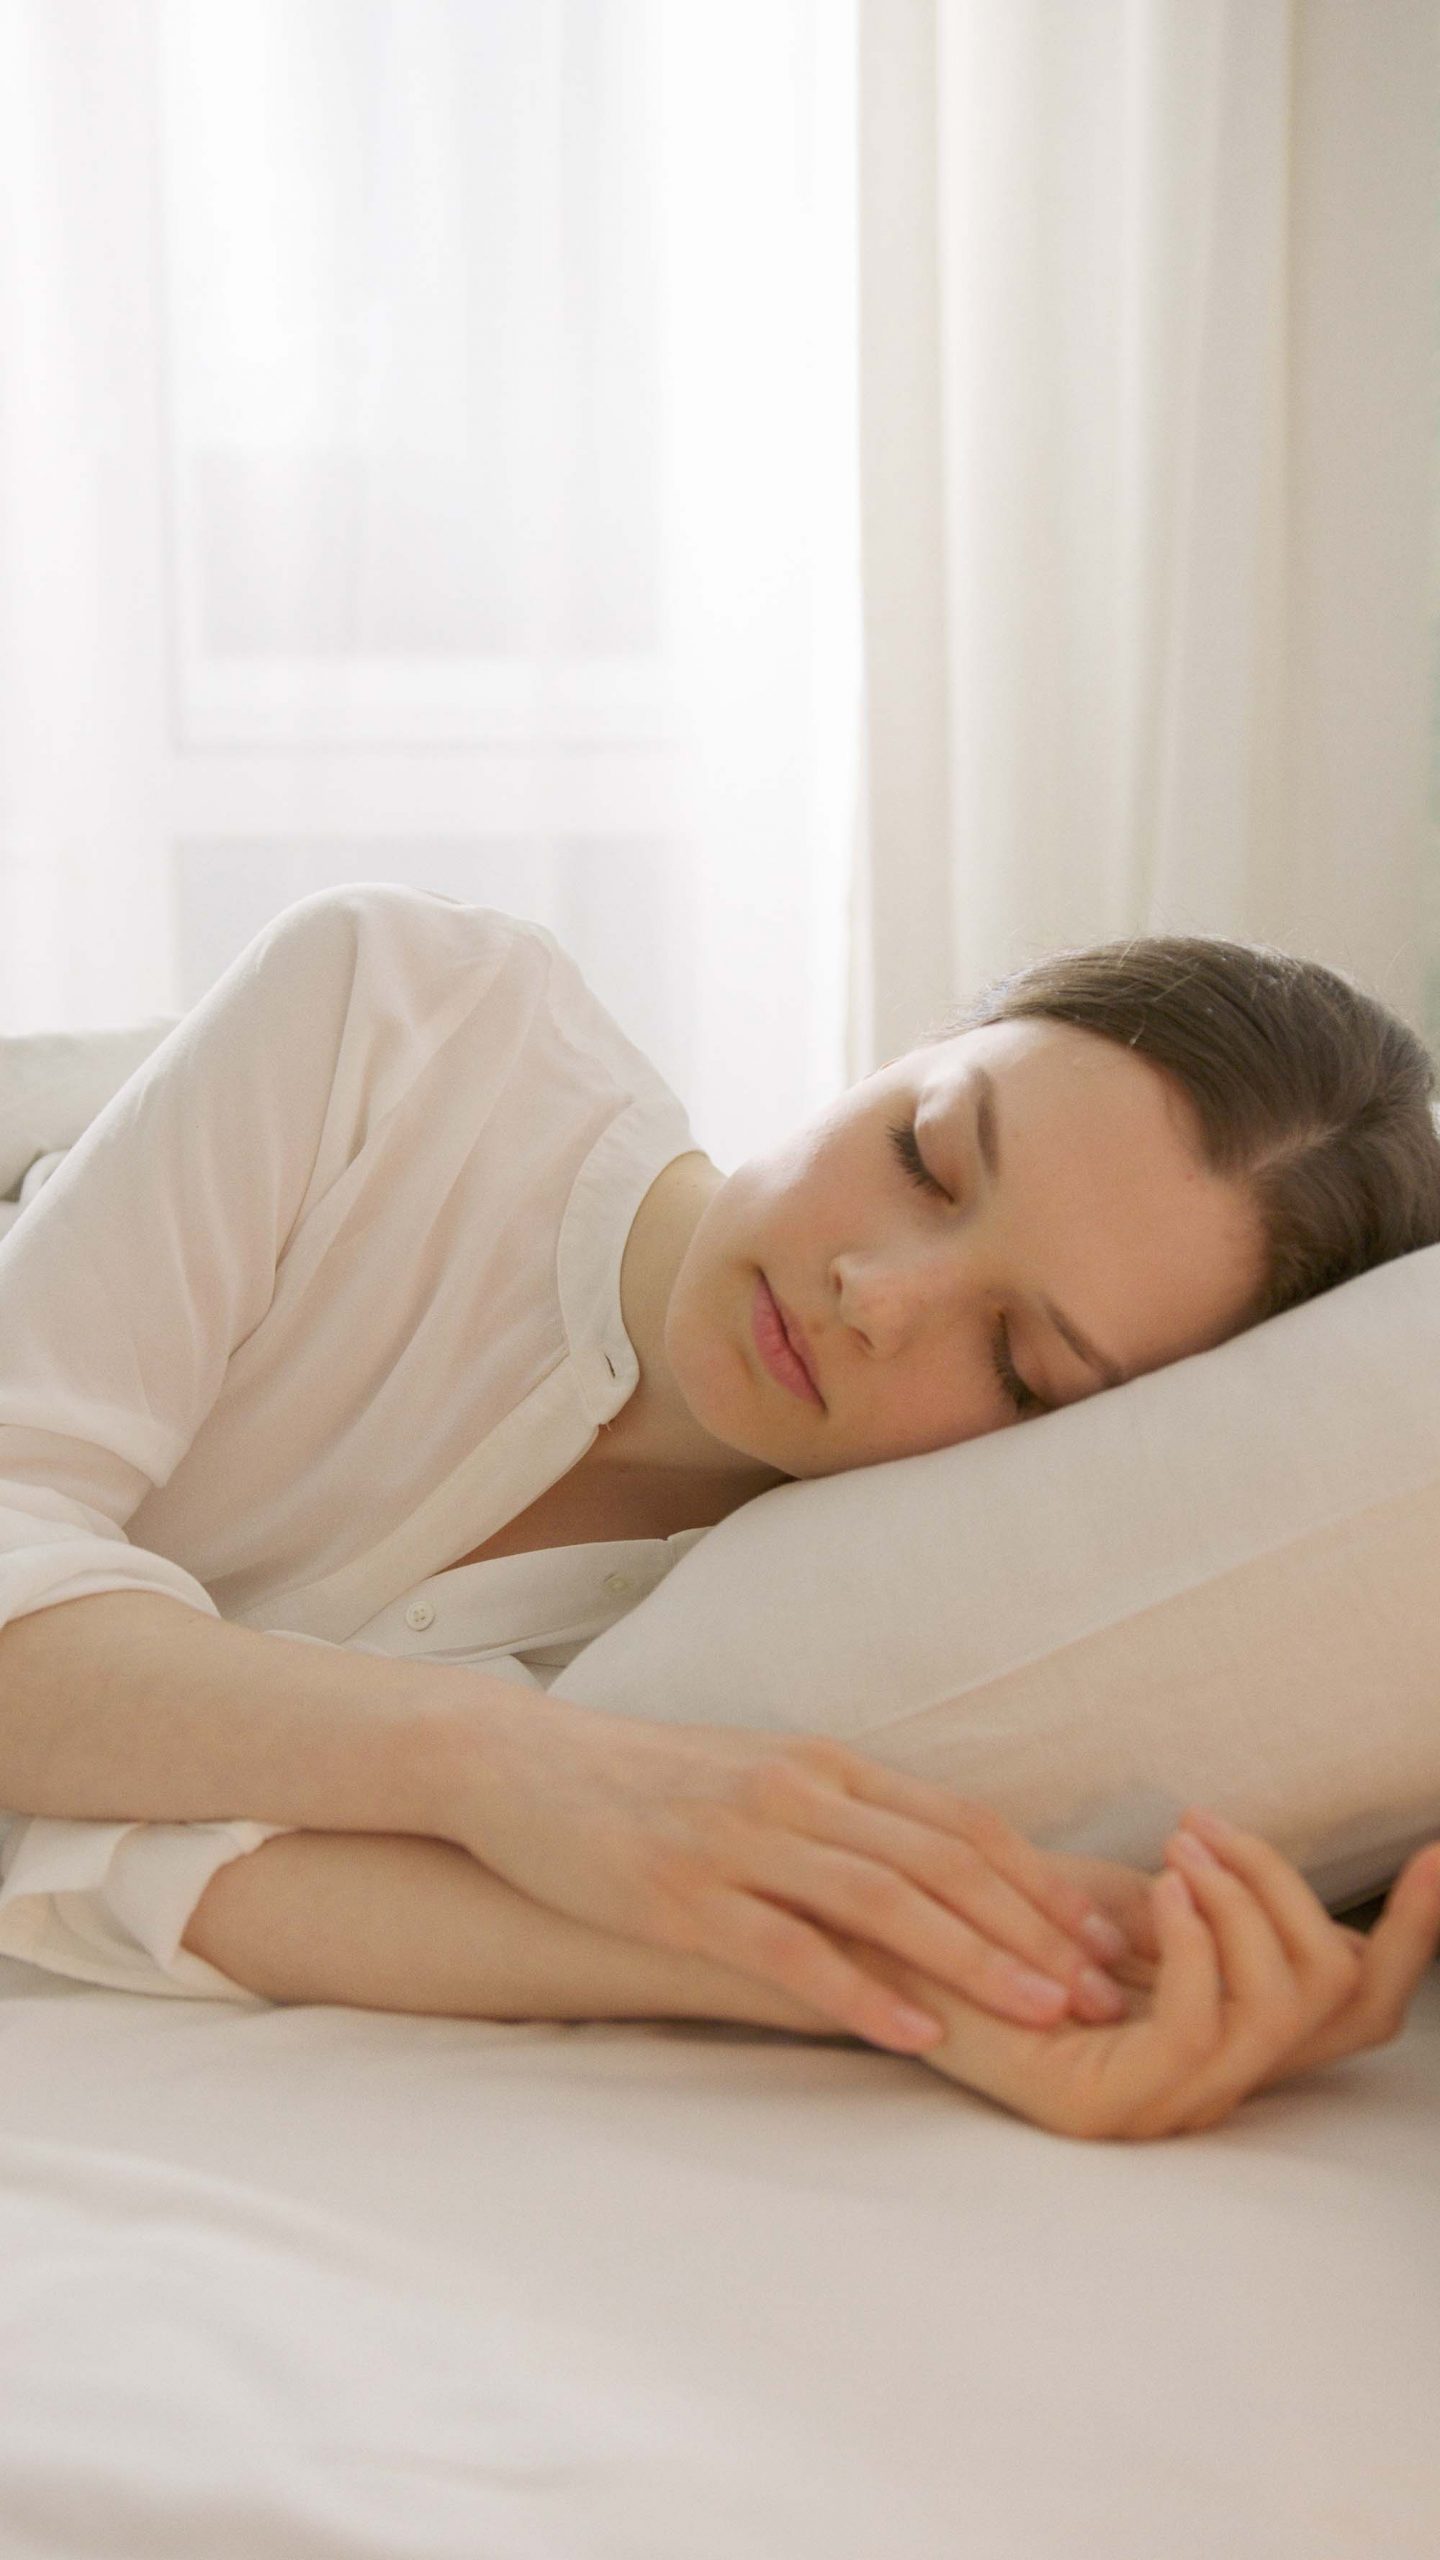 Getting enough sleep improves mental health